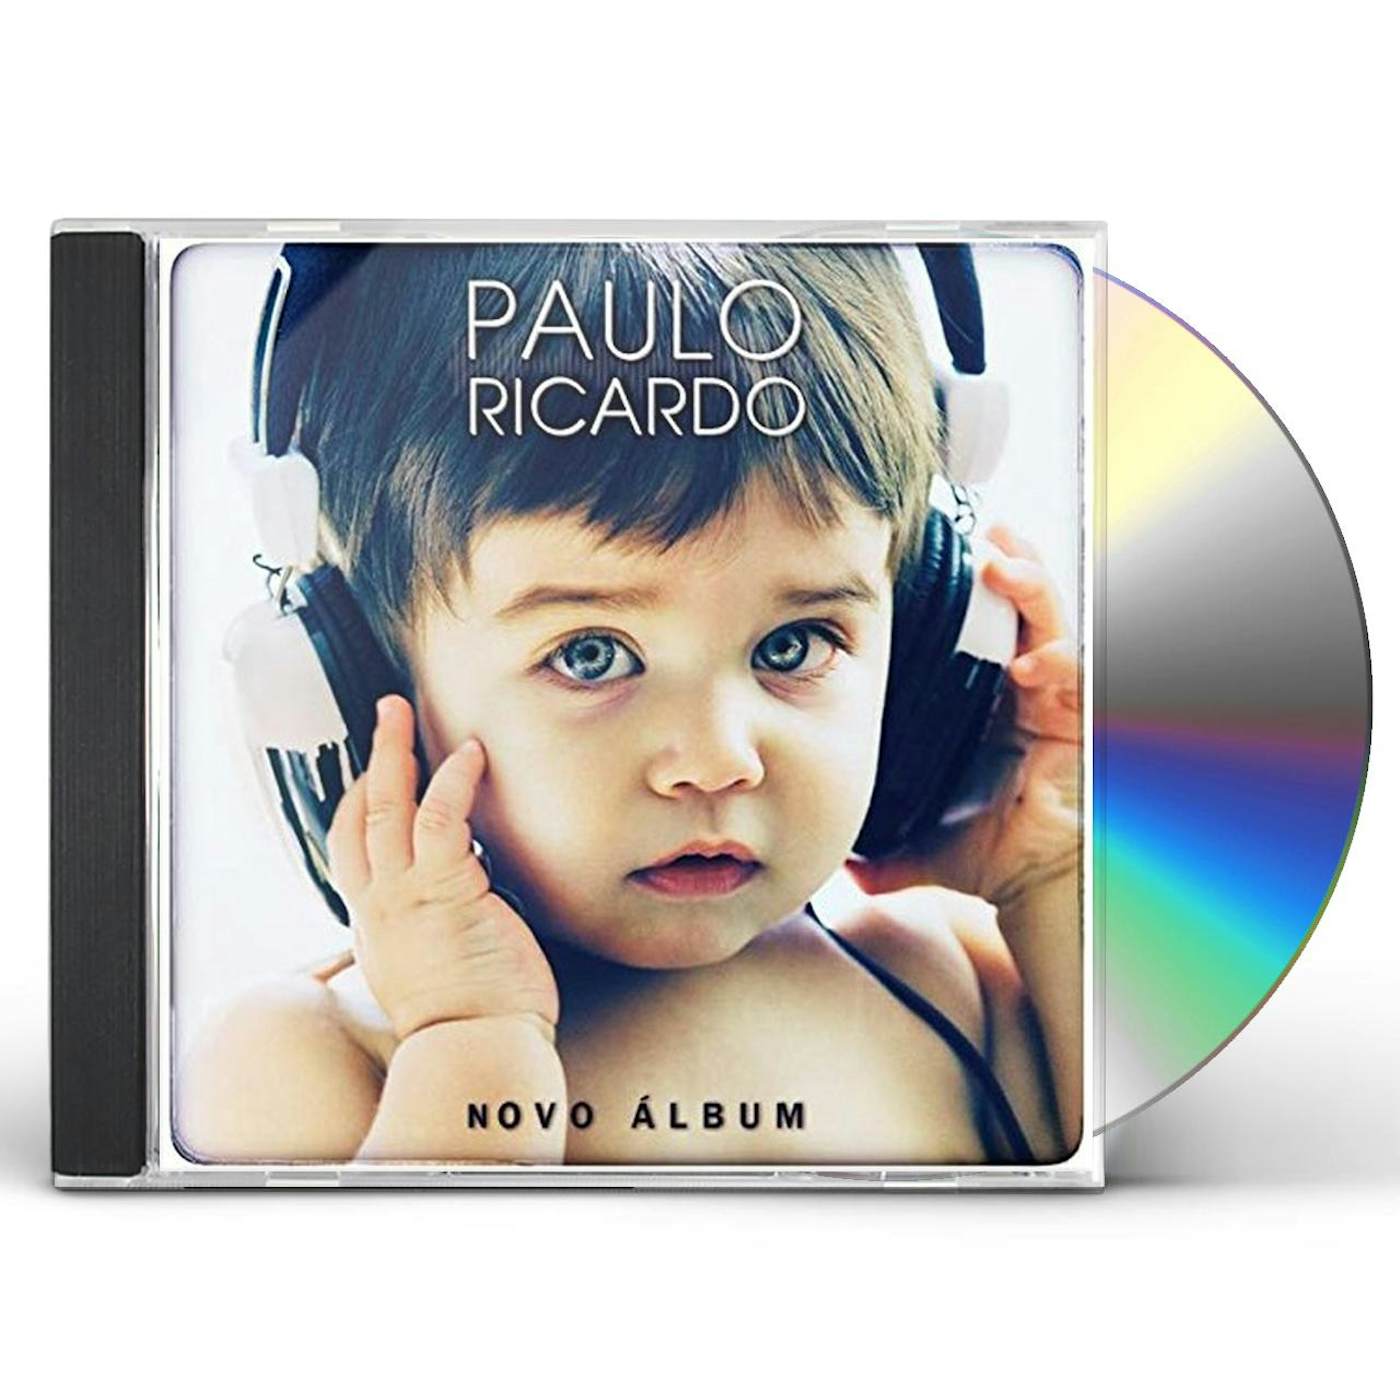 Paulo Ricardo NOVO ALBUM CD